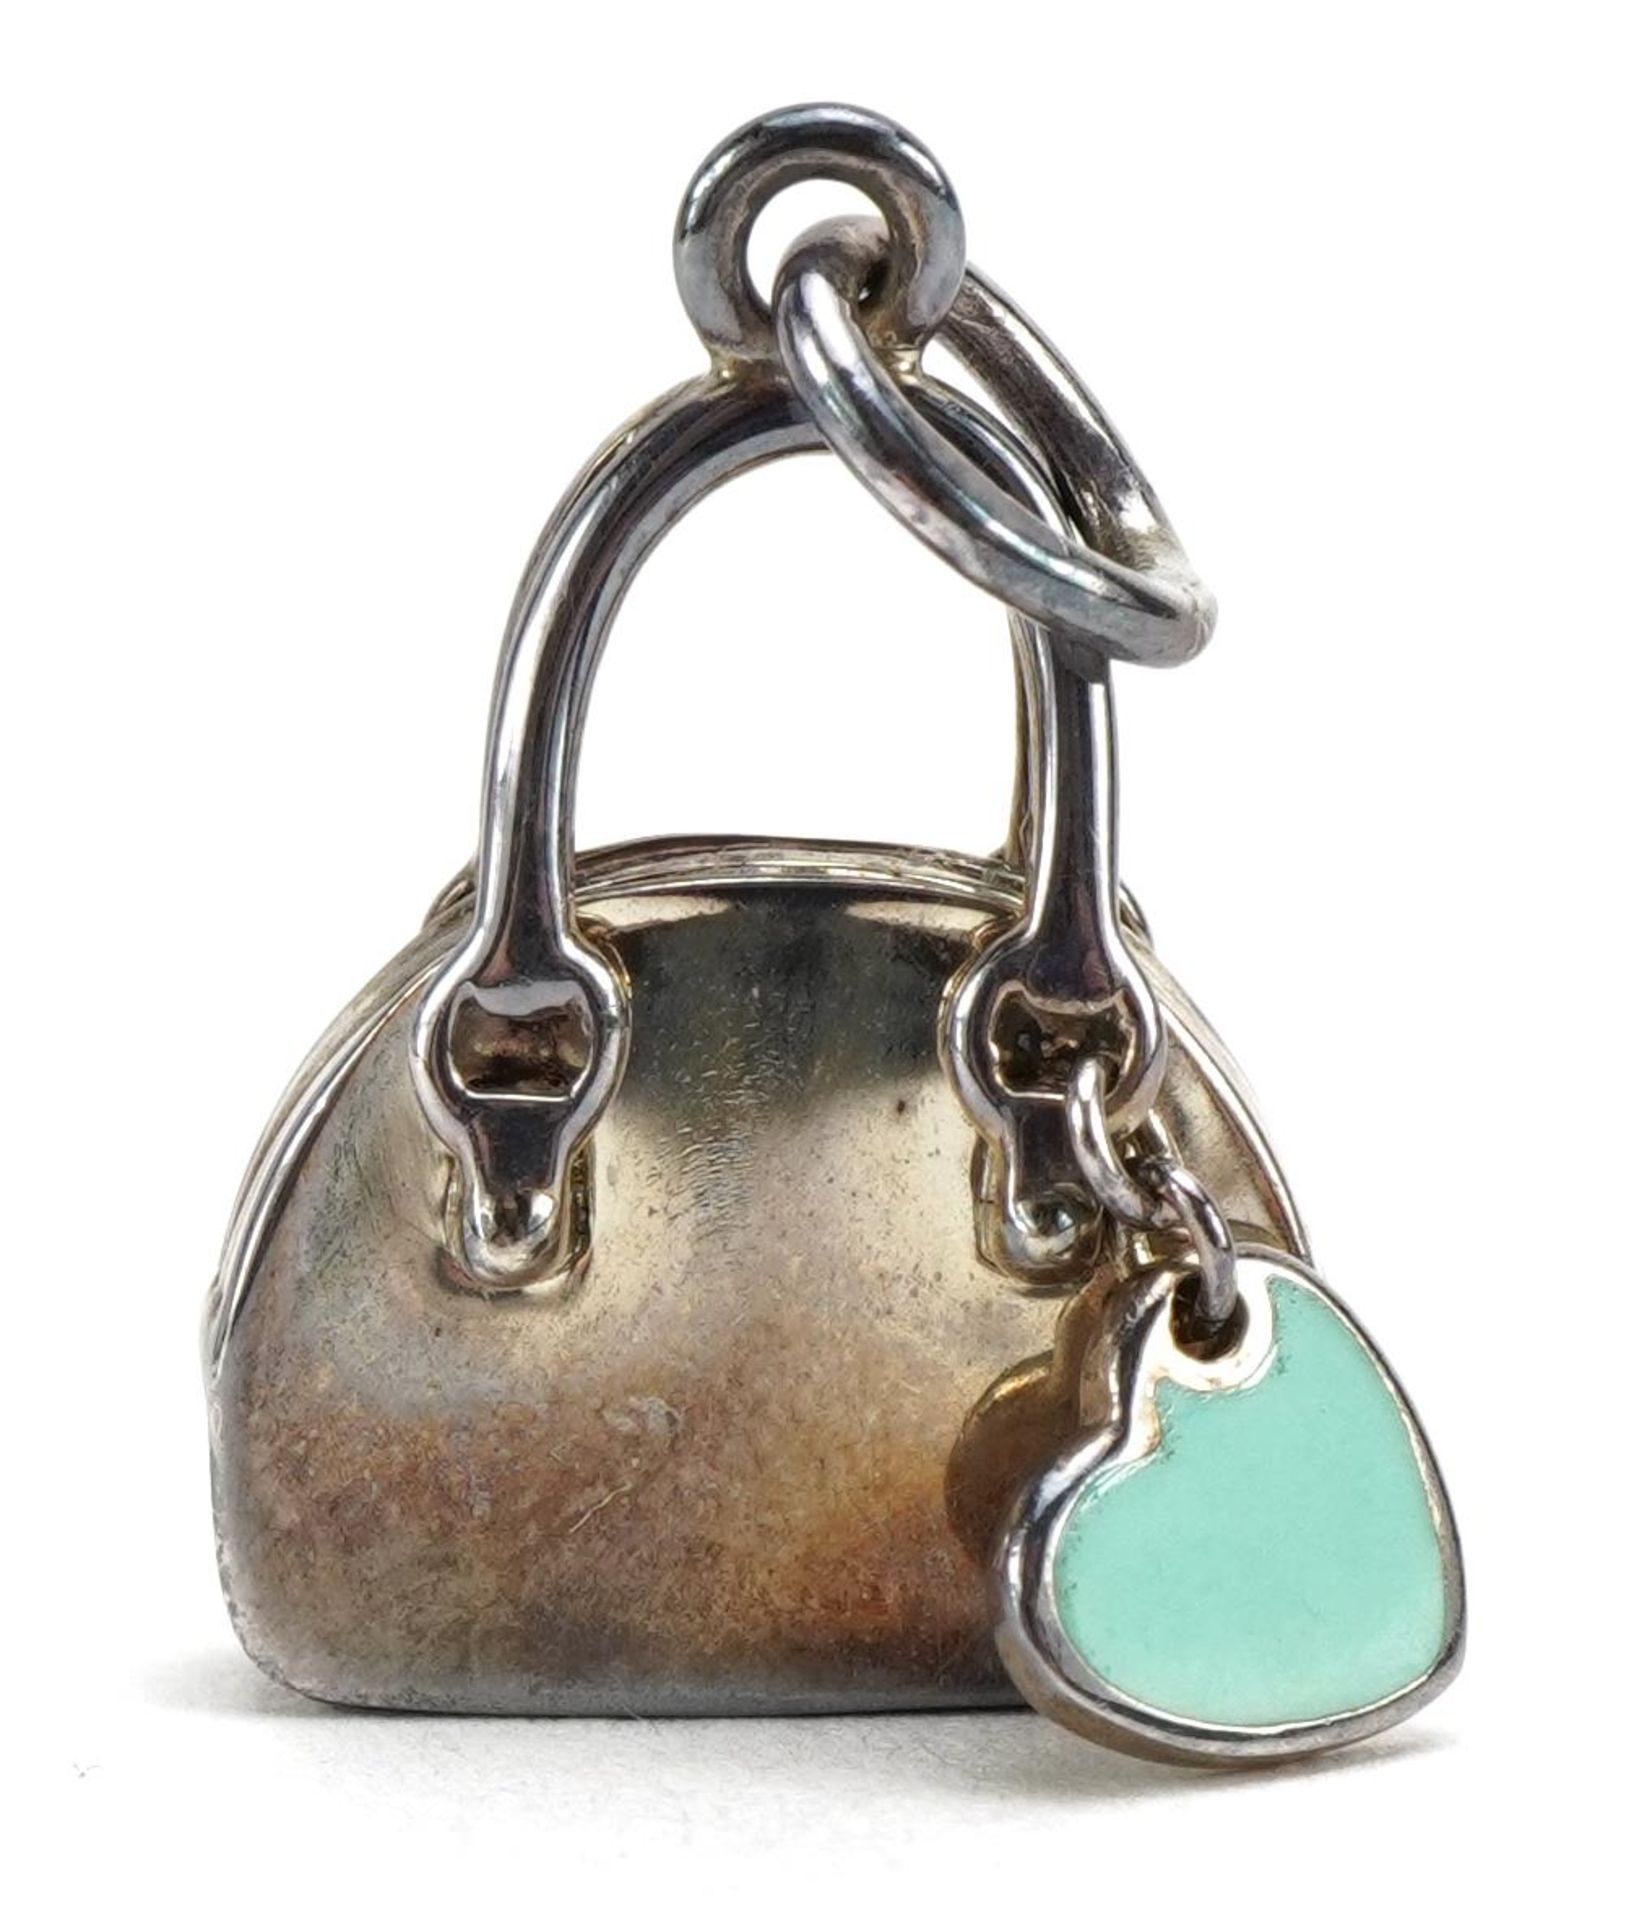 Tiffany & Co silver and enamel handbag charm, 2cm high, 6.1g